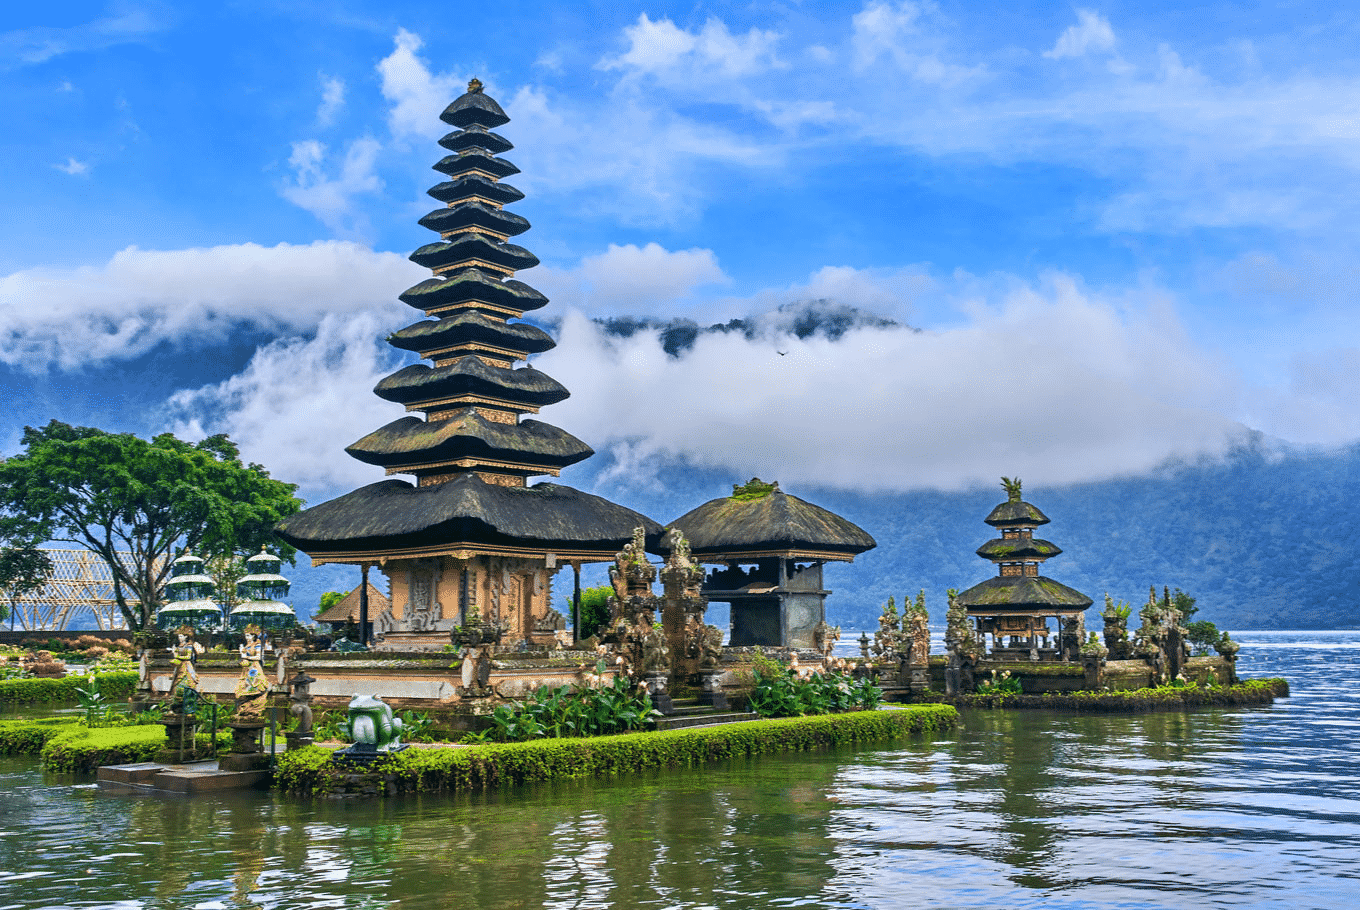 Pilihan Pariwisata Bali - Thegorbalsla